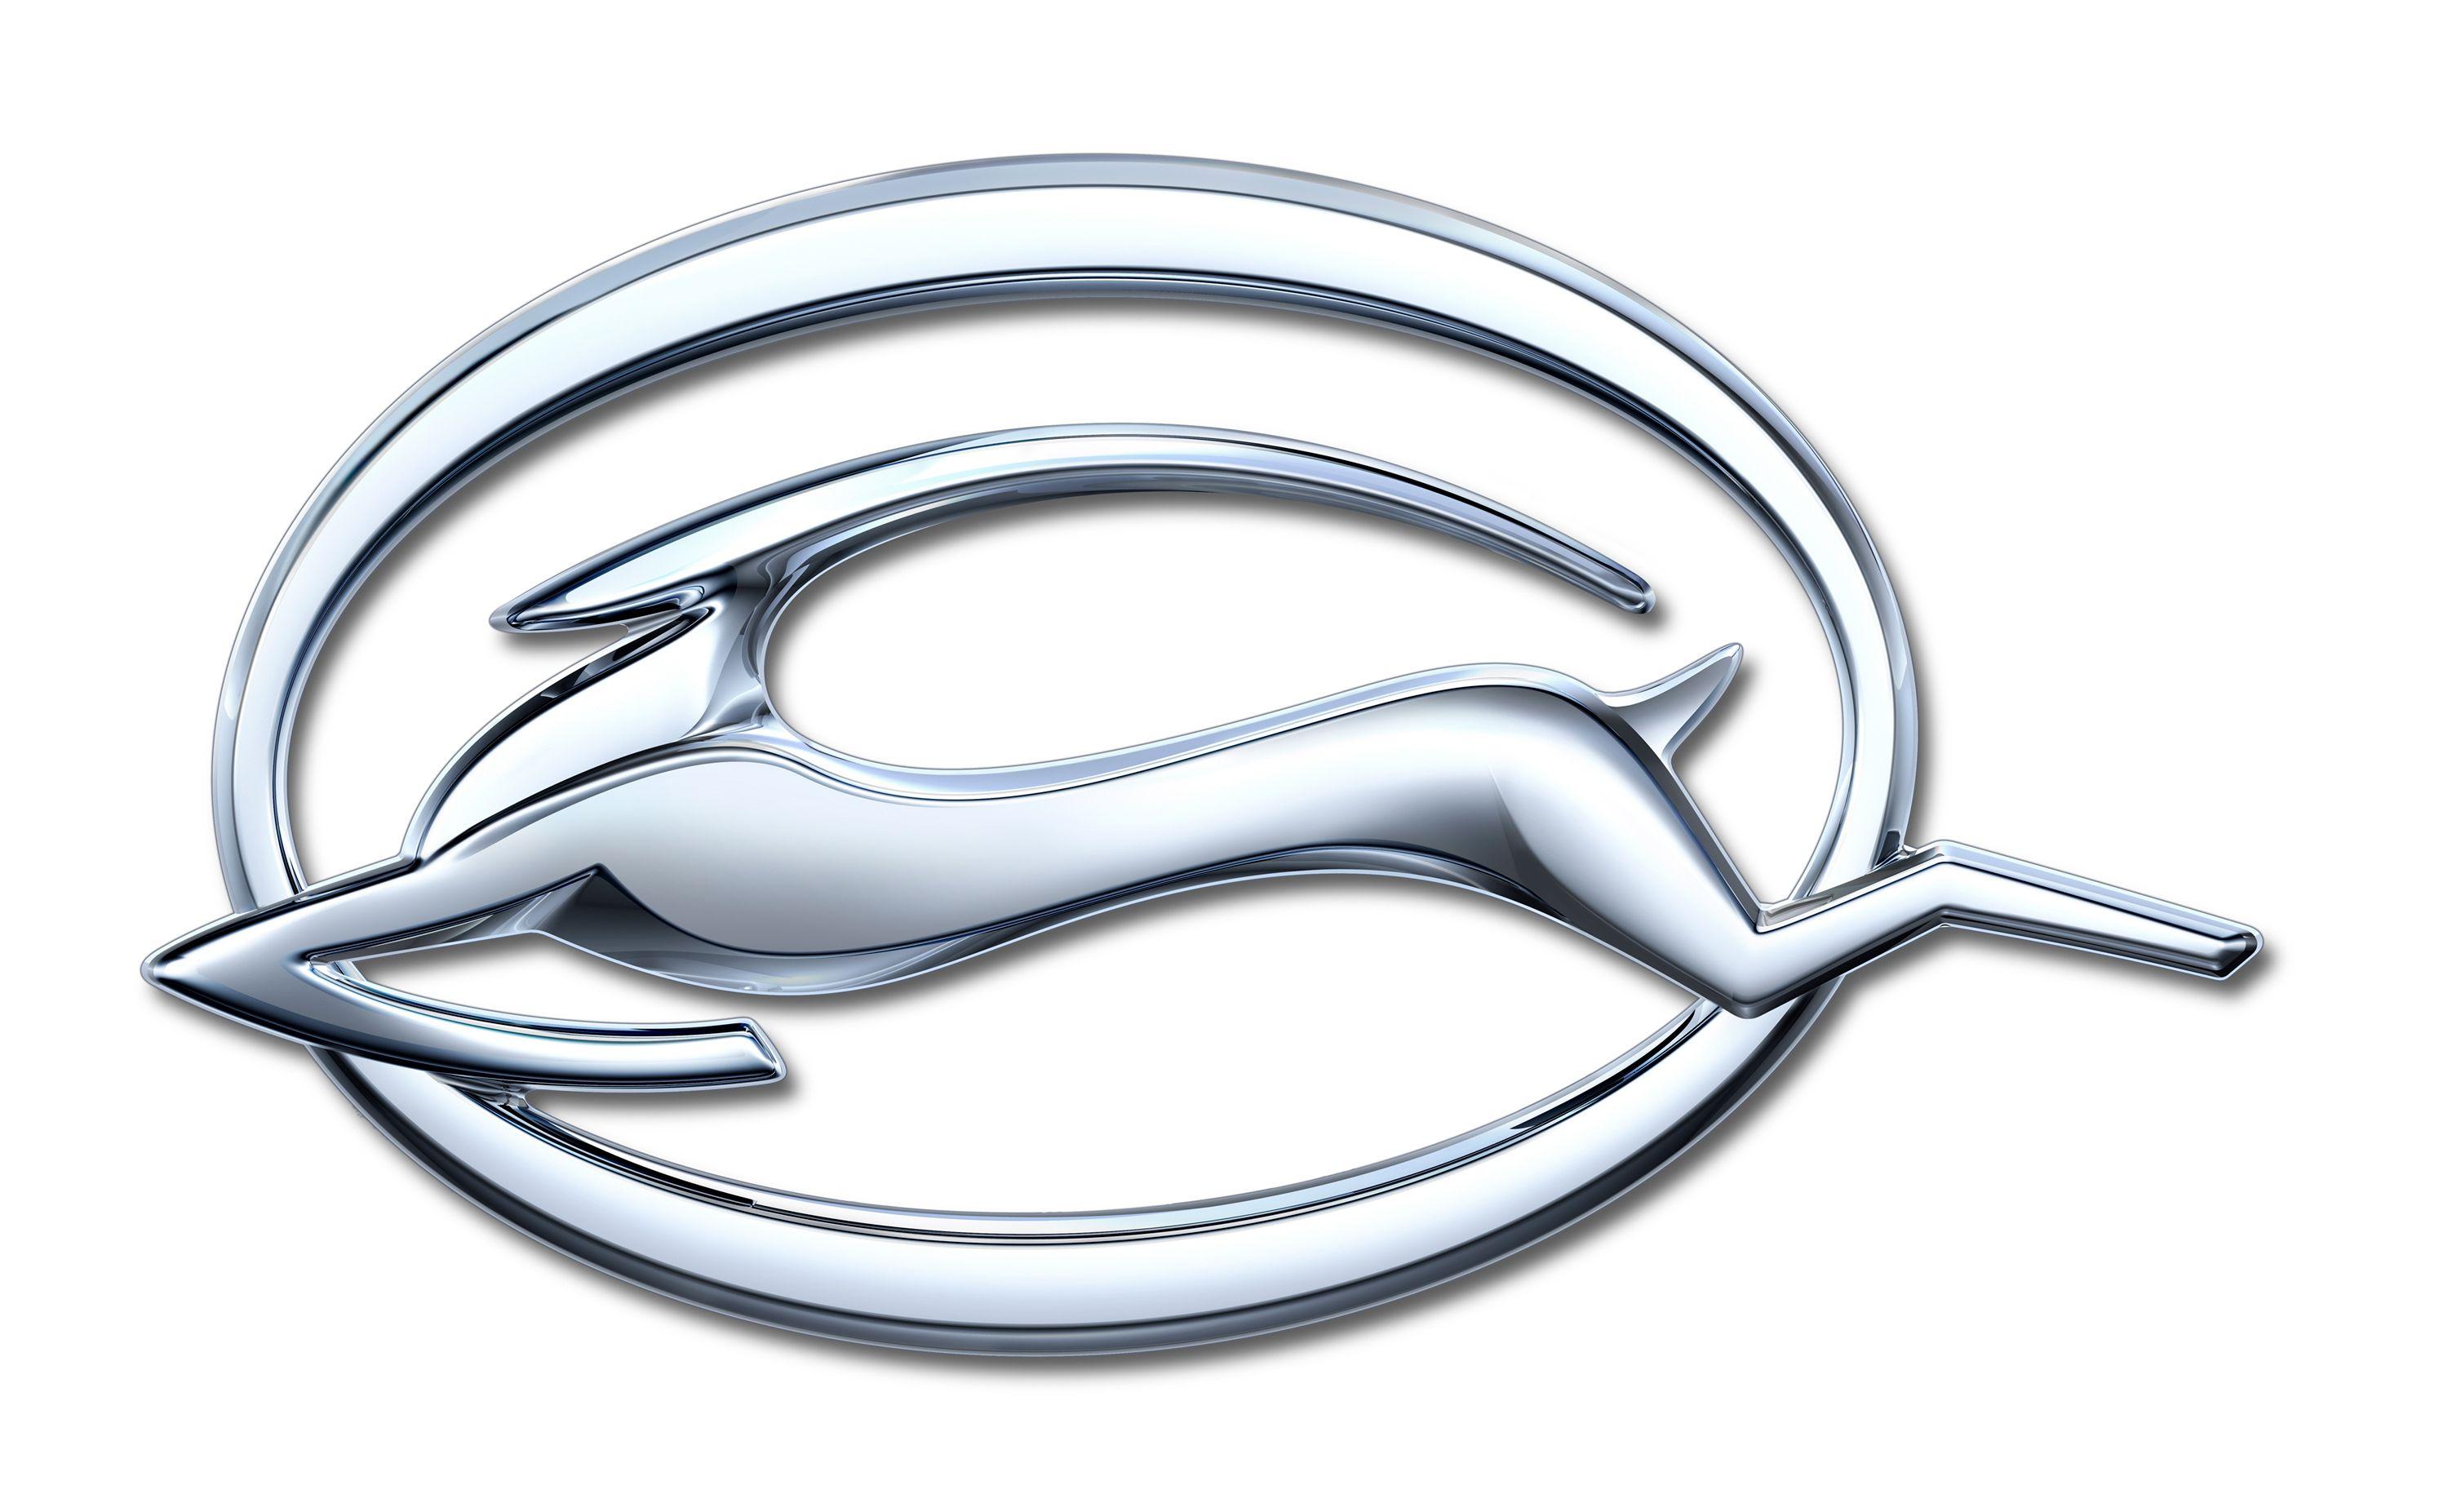 New Chevy Logo - Impala Emblem Design Leaps Forward with New Model